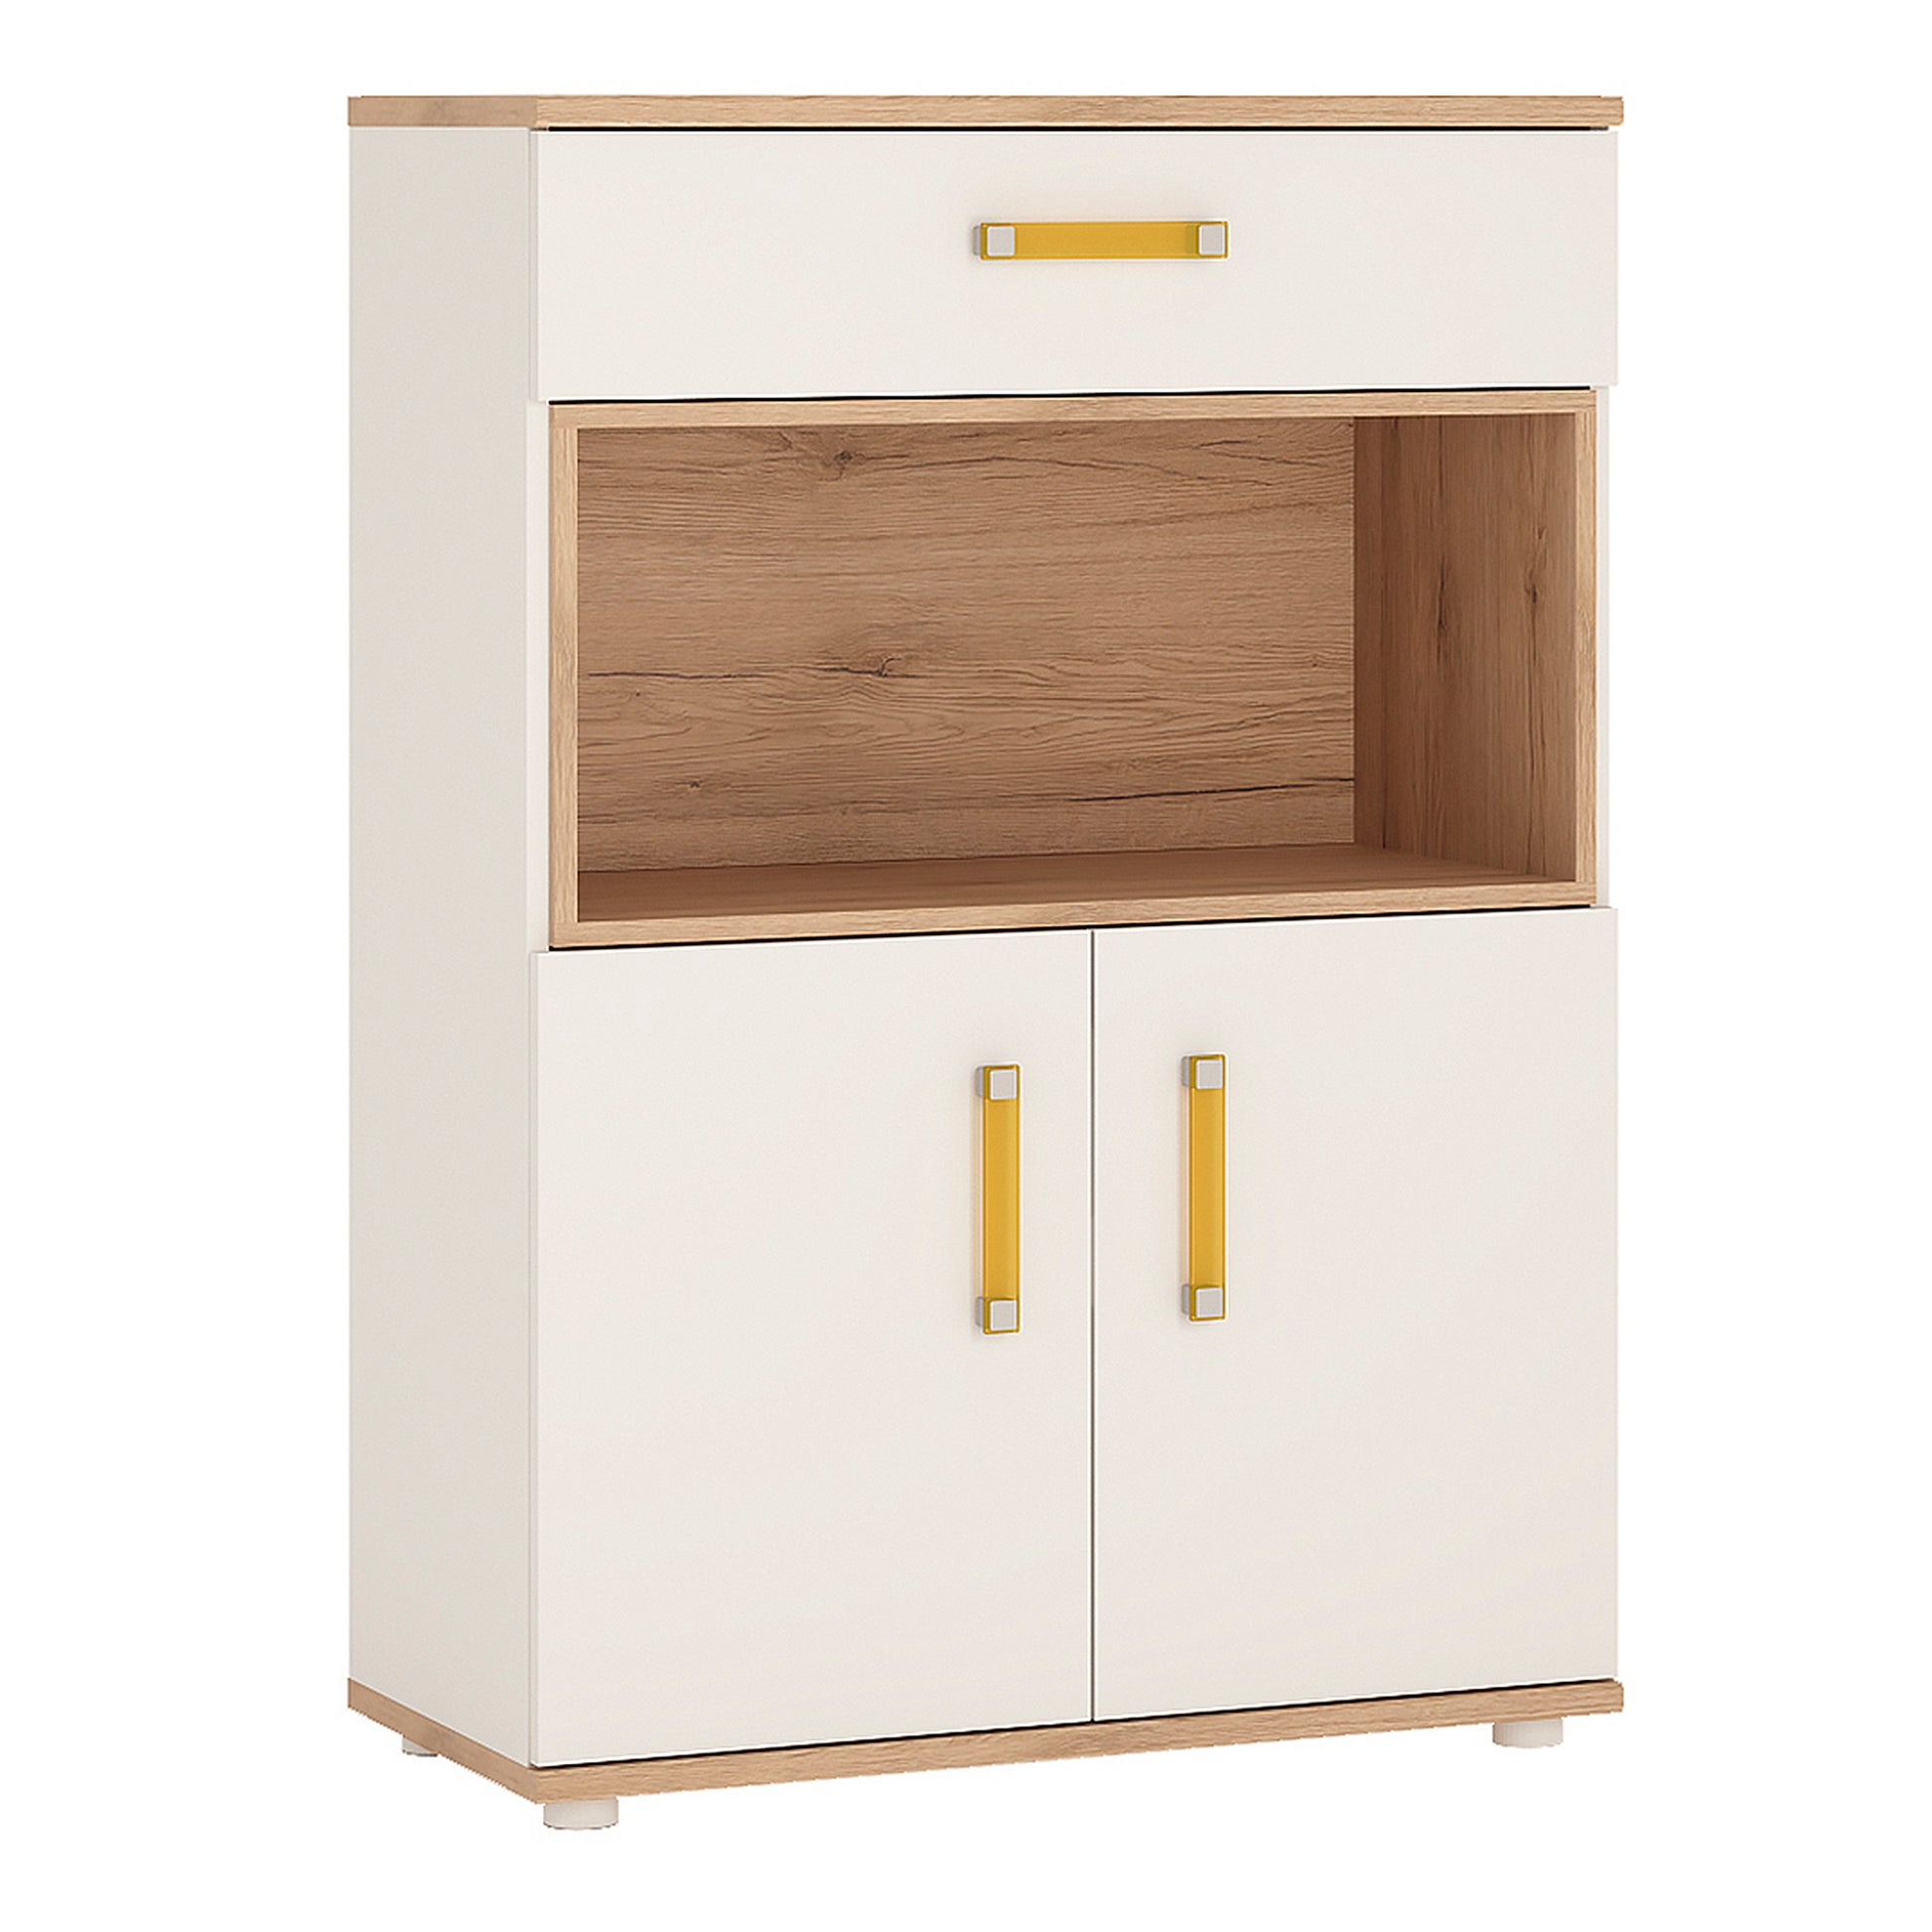 4Kids  2 Door 1 Drawer Cupboard with open shelf in Light Oak and white High Gloss (orange handles)